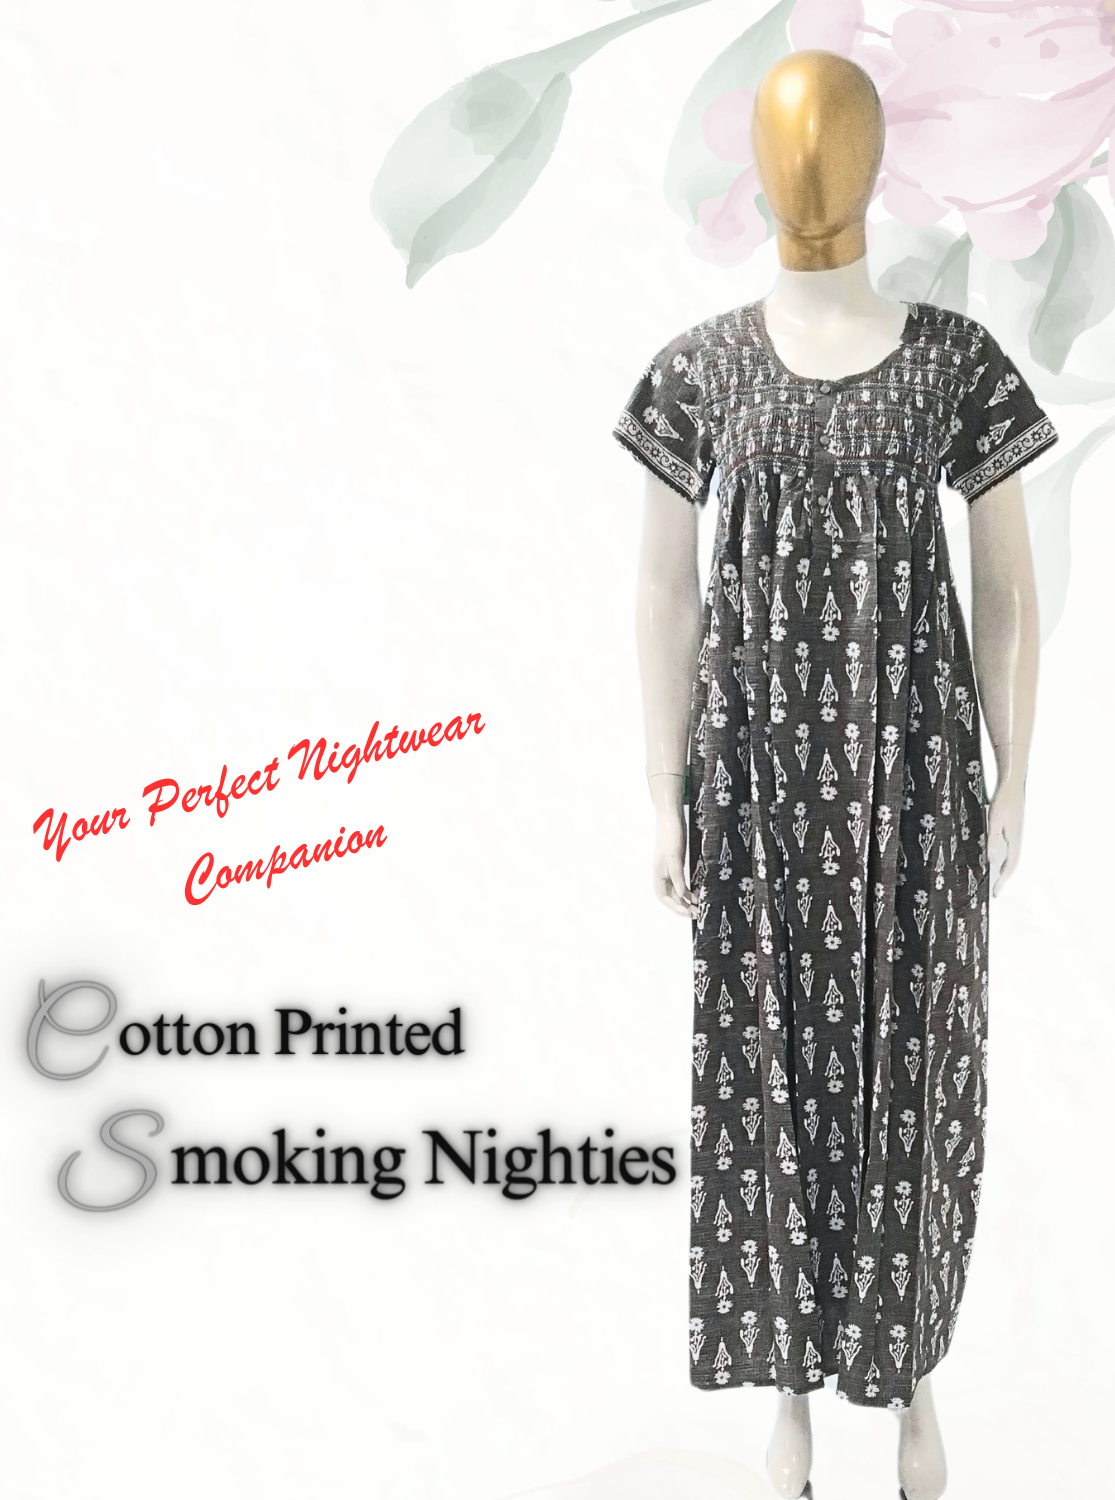 New MANGAI Premium COTTON Printed Smokey Nighty | Beautiful Pleated Design | Side Pocket | Stylish Nighty for Trendy Women's | Your Perfect Nightwear Collection's